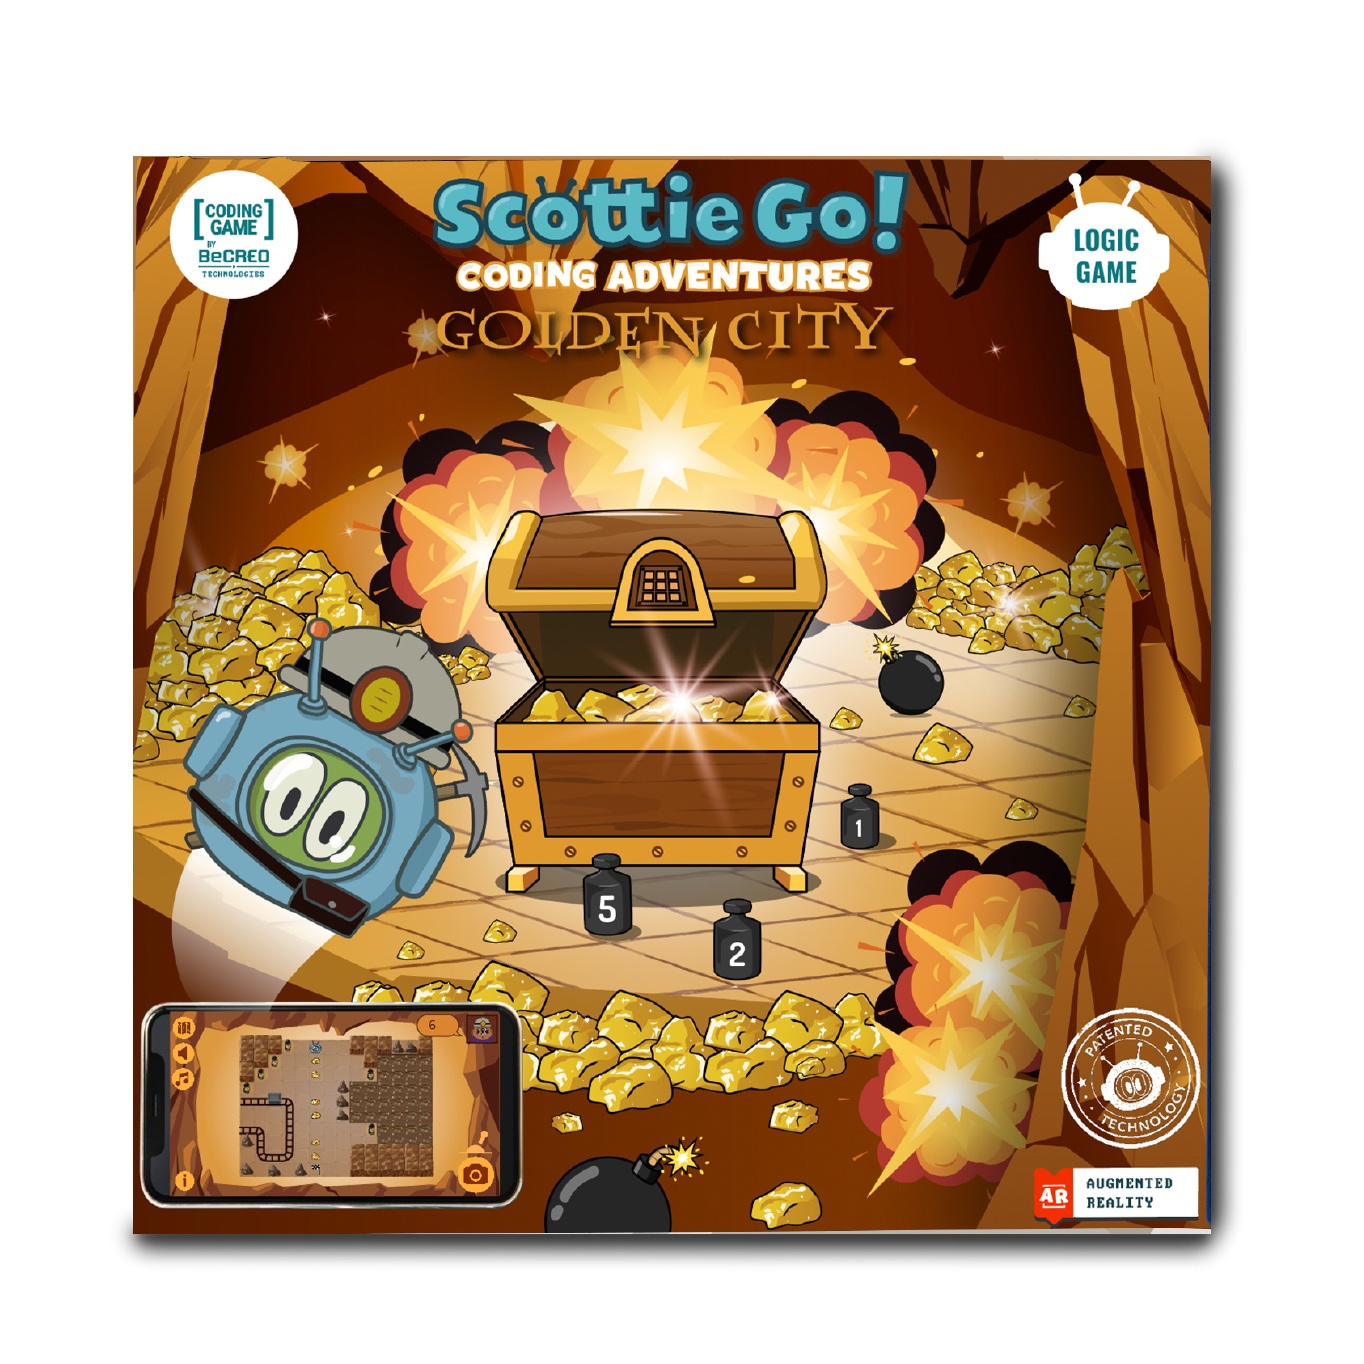 Scottie Go! Coding Adventures - Golden City - multimedialna gra edukacyjna + aplikacja Android/iOS/Windows